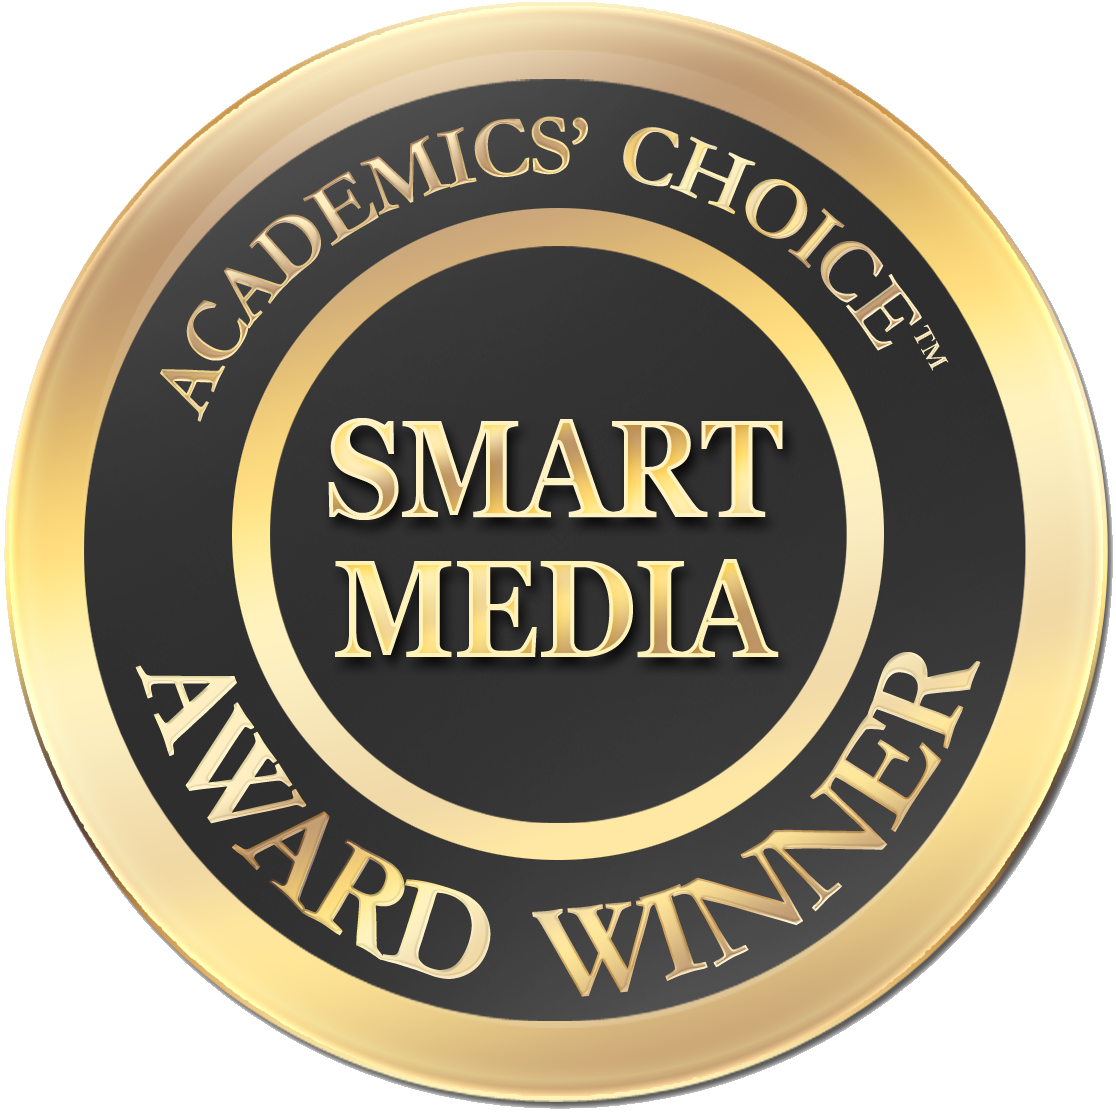 Academics Choice Smart media award